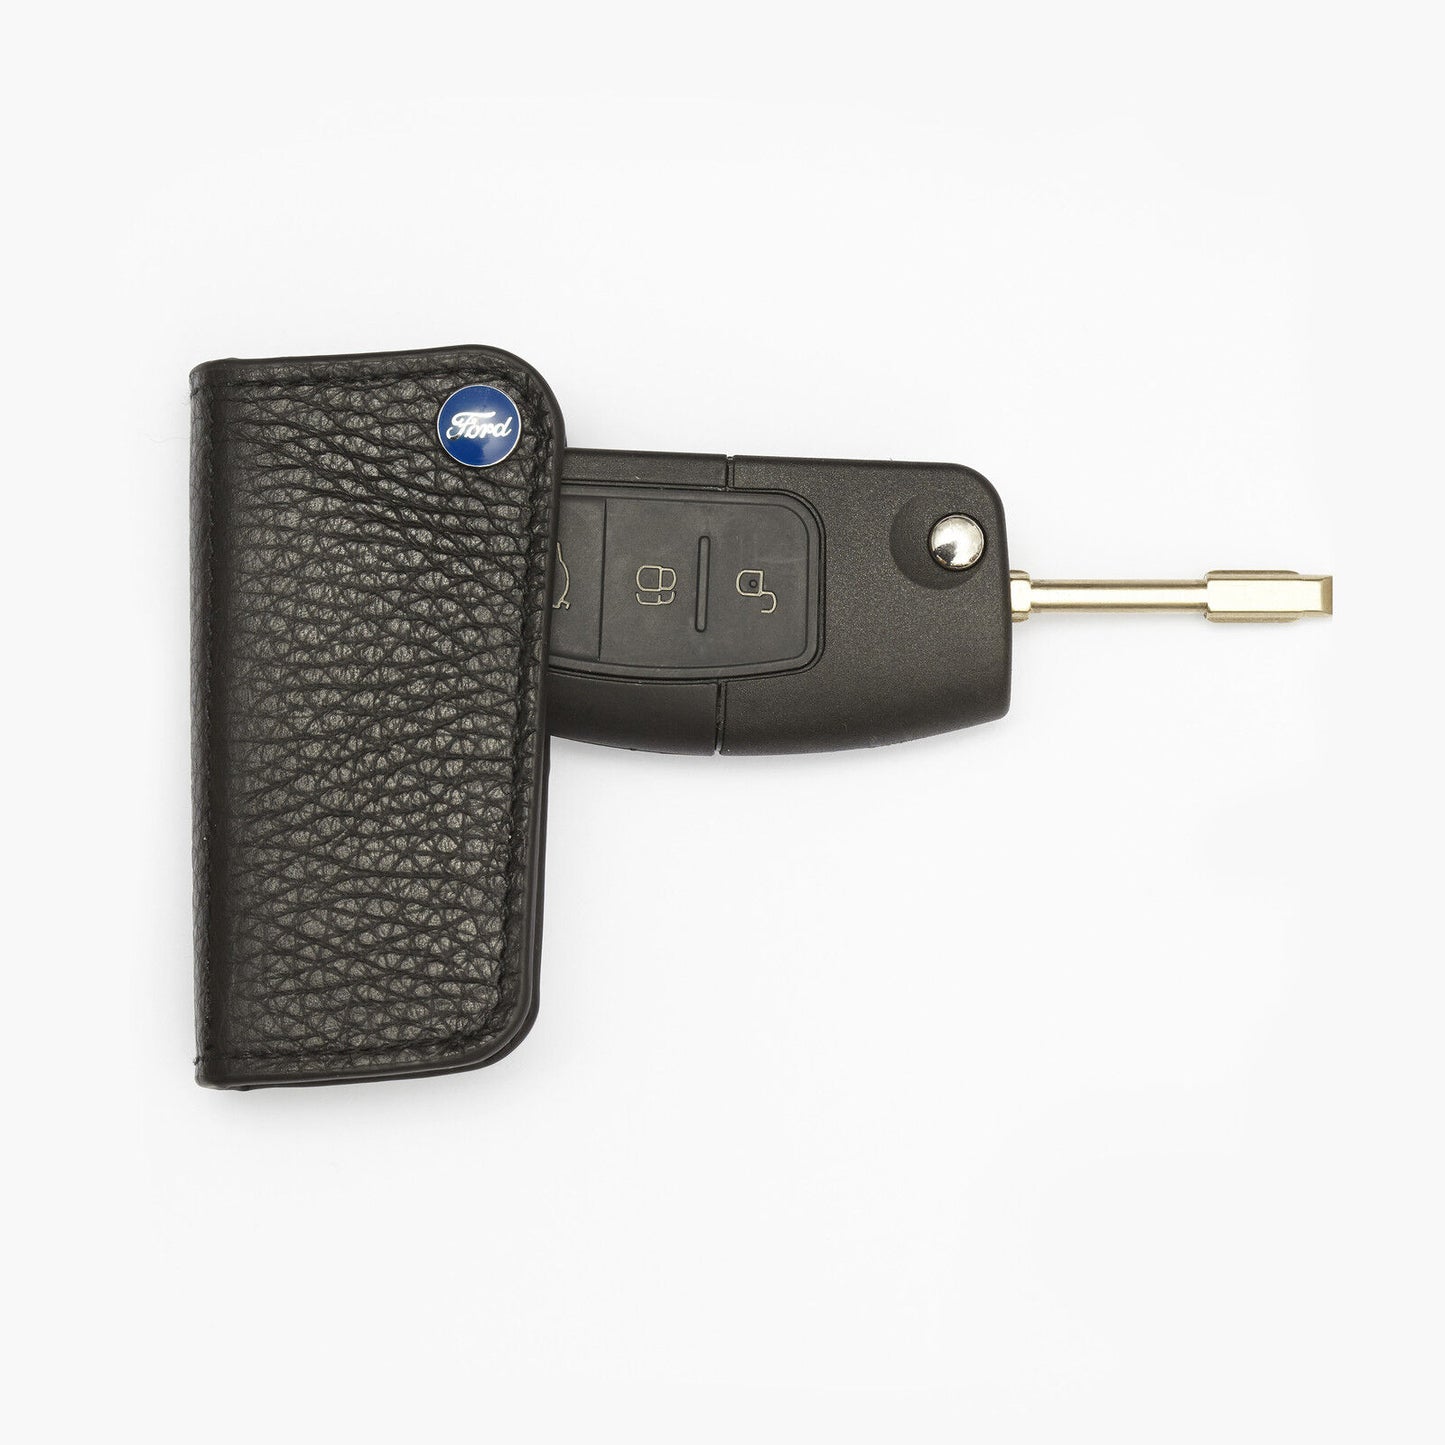 Richbrook 'Official Licensed' Ford Logo FlipFob (Leather Car Key Holder)